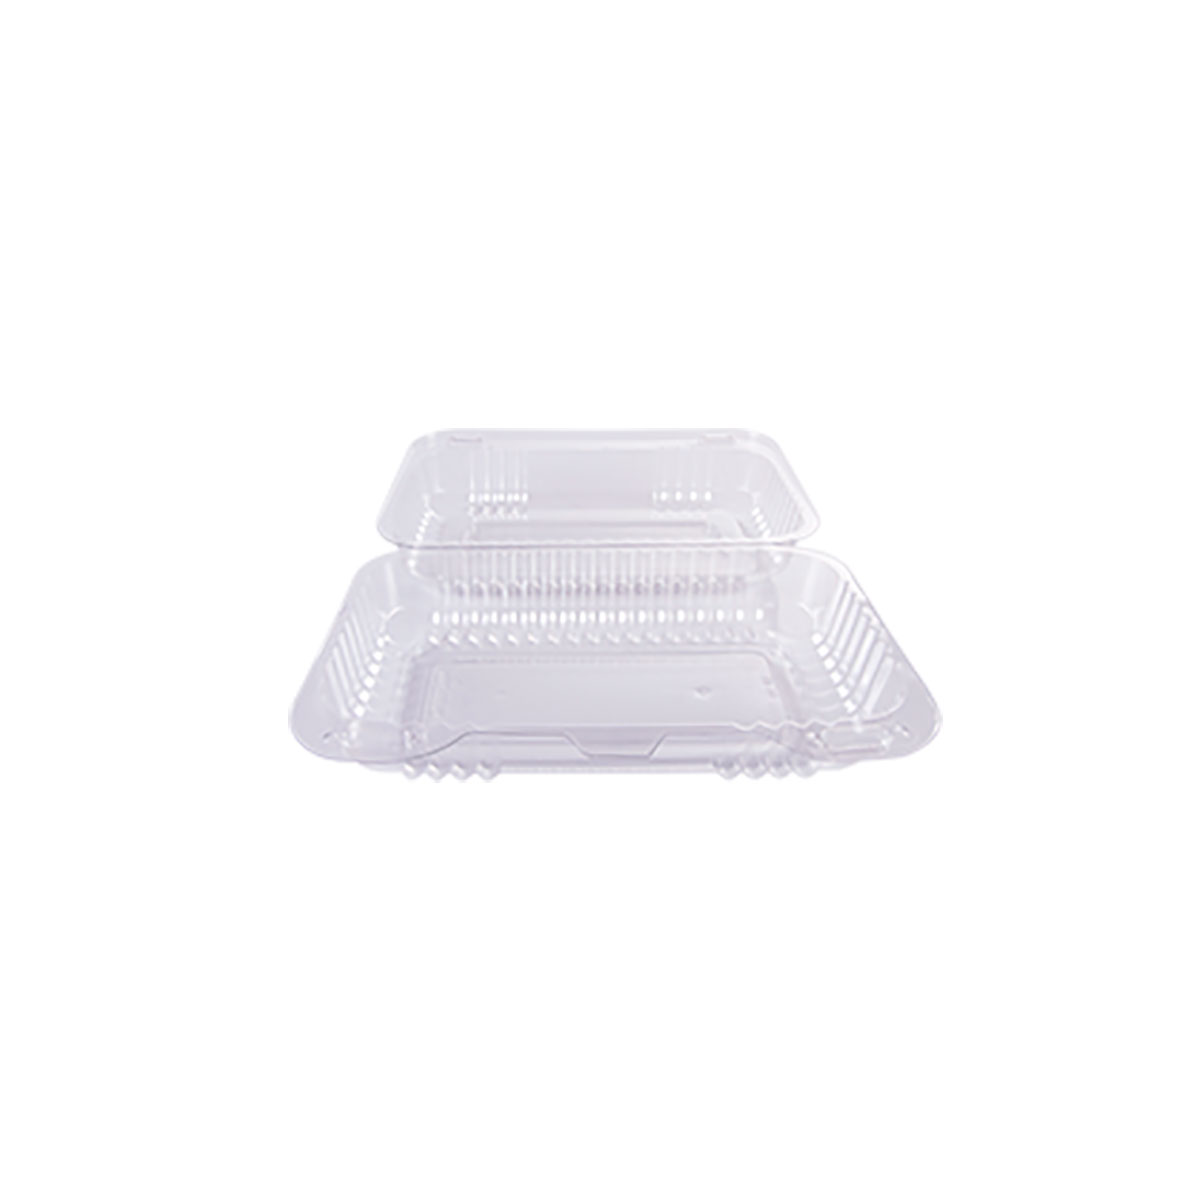 Caixa Embalagem Lunch Box 10 Transparente Prafesta 100und - Foto 1